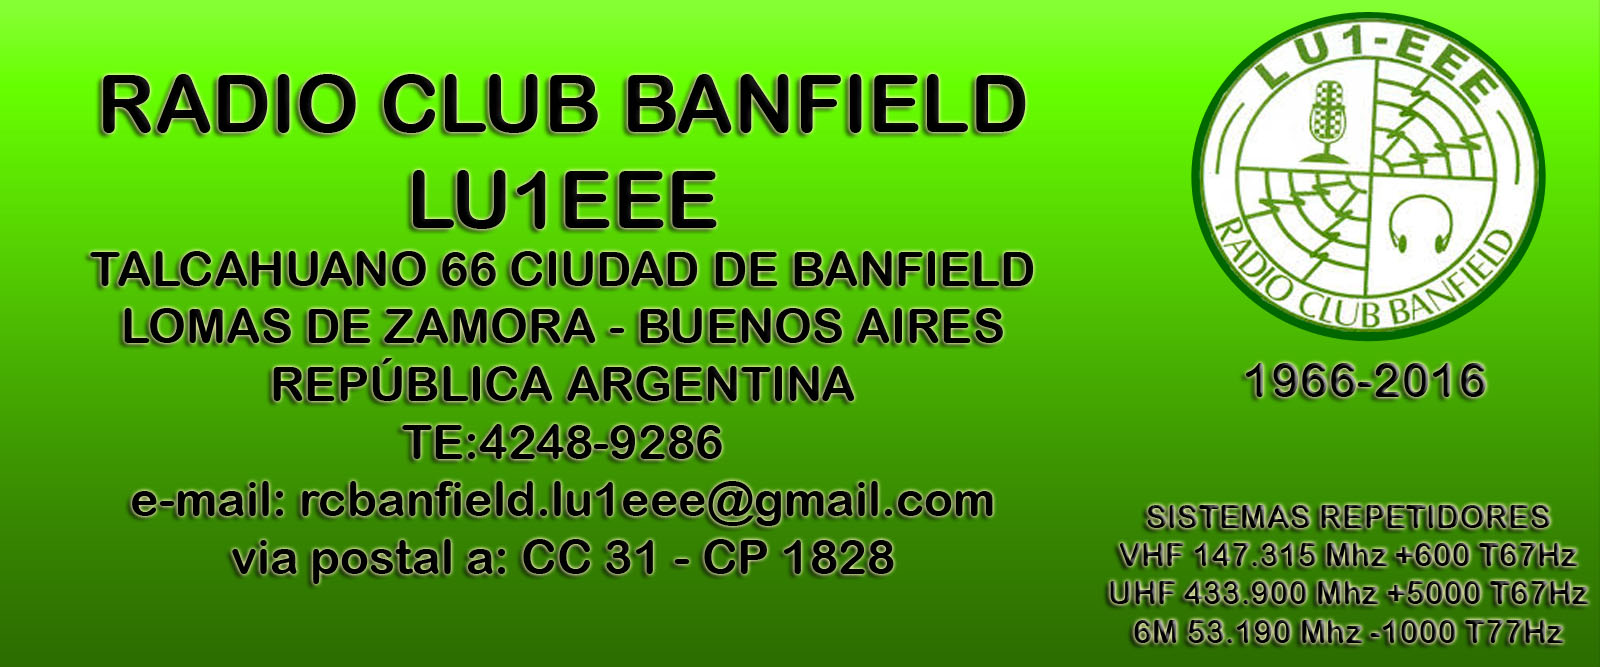 Radio Club Banfield - LU1EEE